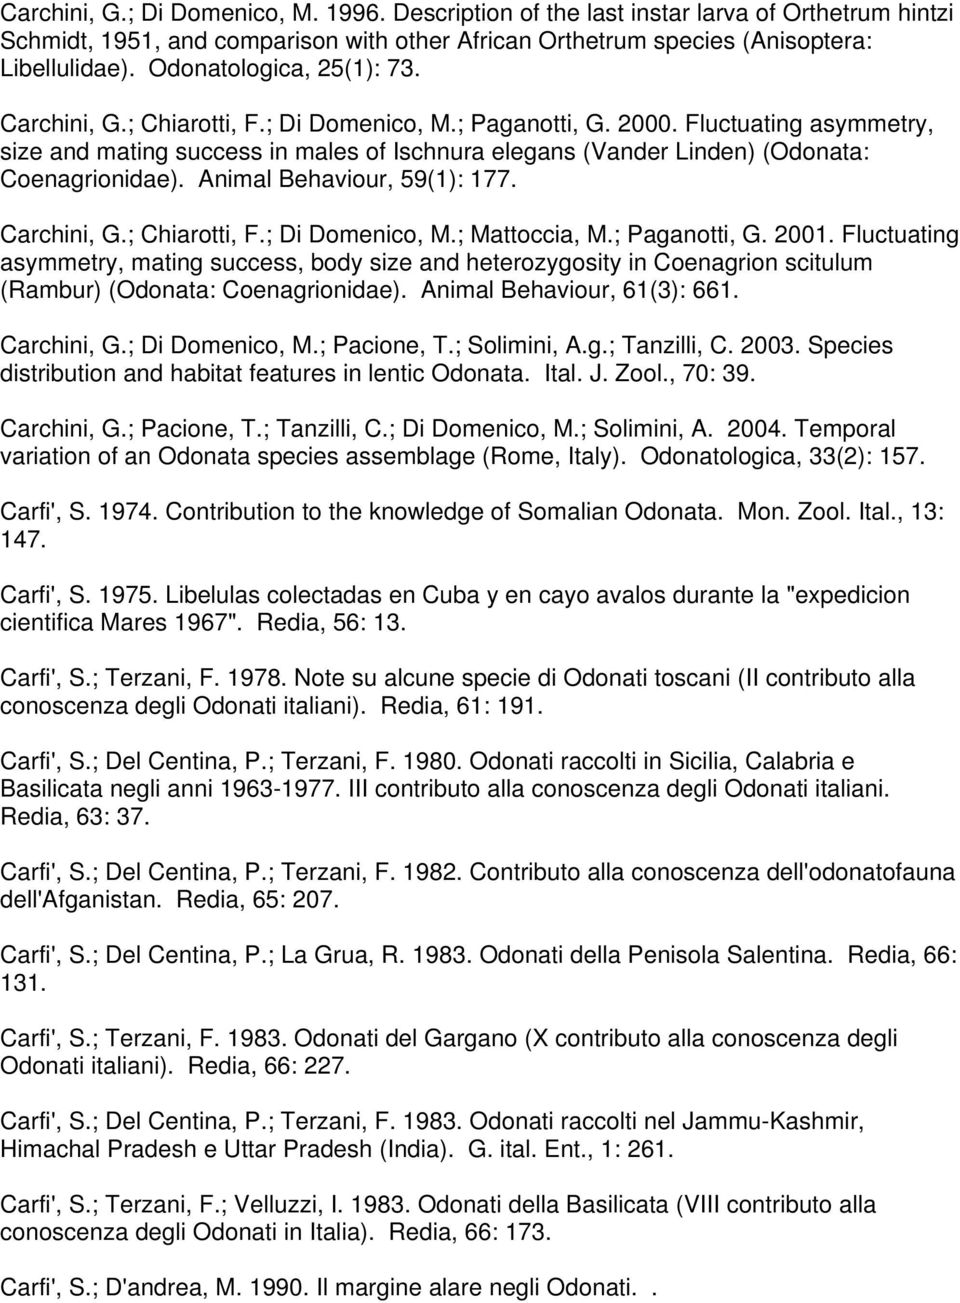 Fluctuating asymmetry, size and mating success in males of Ischnura elegans (Vander Linden) (Odonata: Coenagrionidae). Animal Behaviour, 59(1): 177. Carchini, G.; Chiarotti, F.; Di Domenico, M.